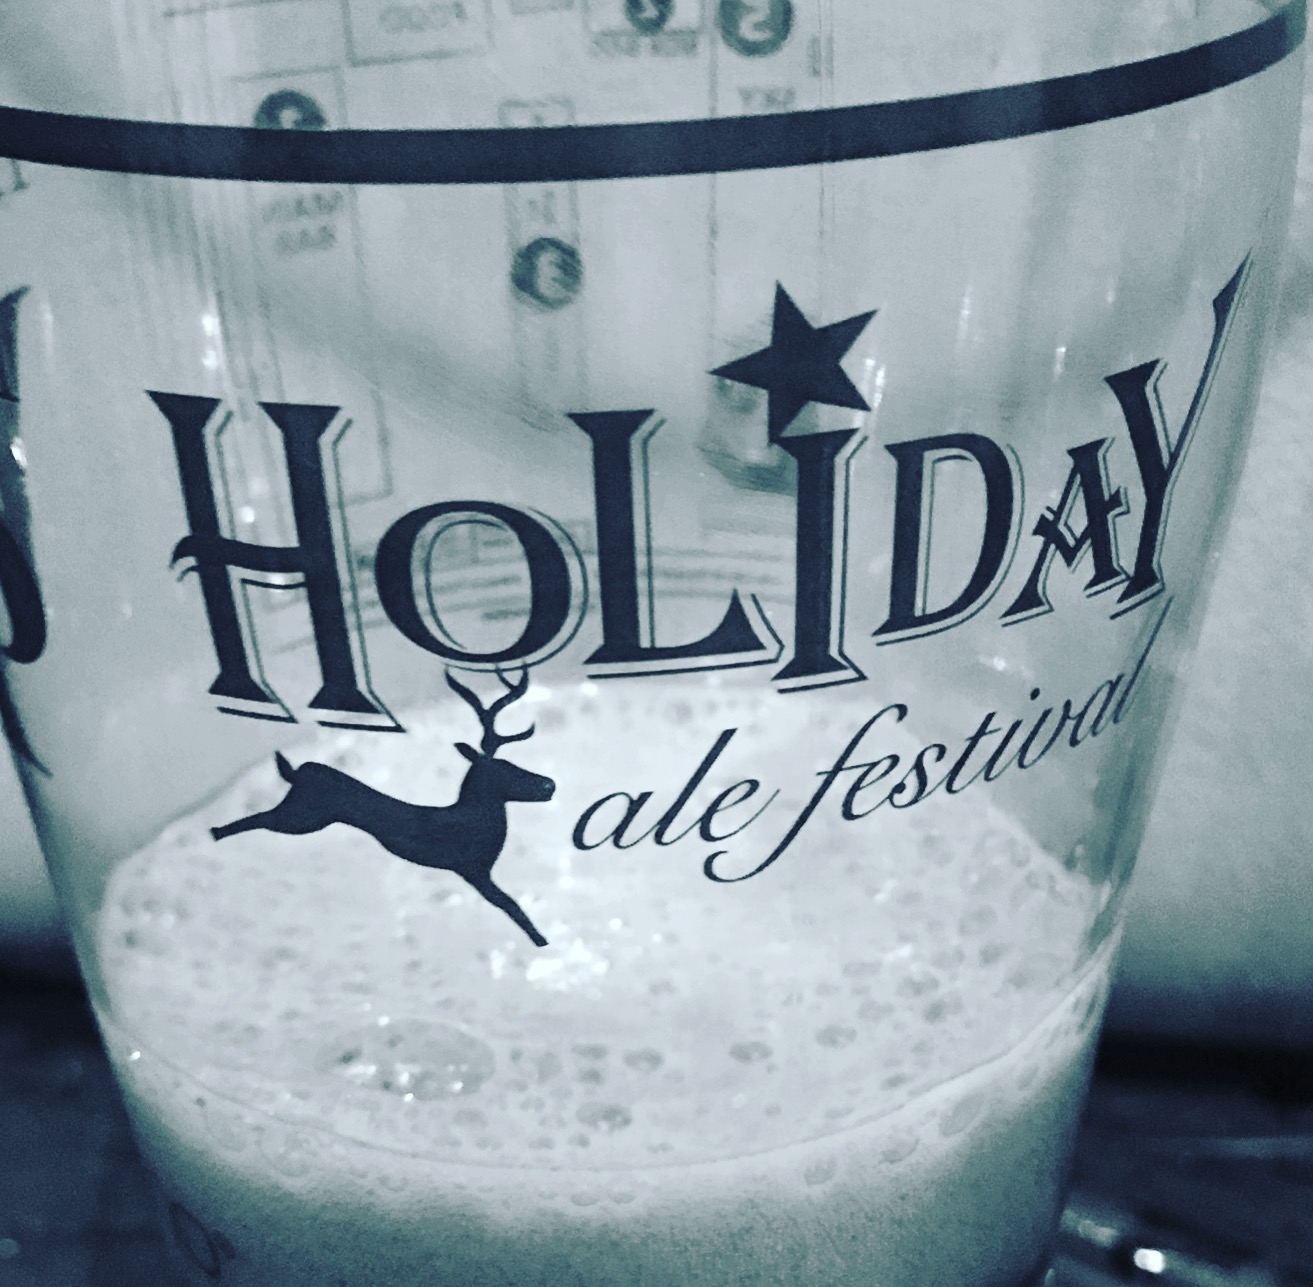 Holiday Ale Festival 101 - Portland Beer Podcast Episode 53